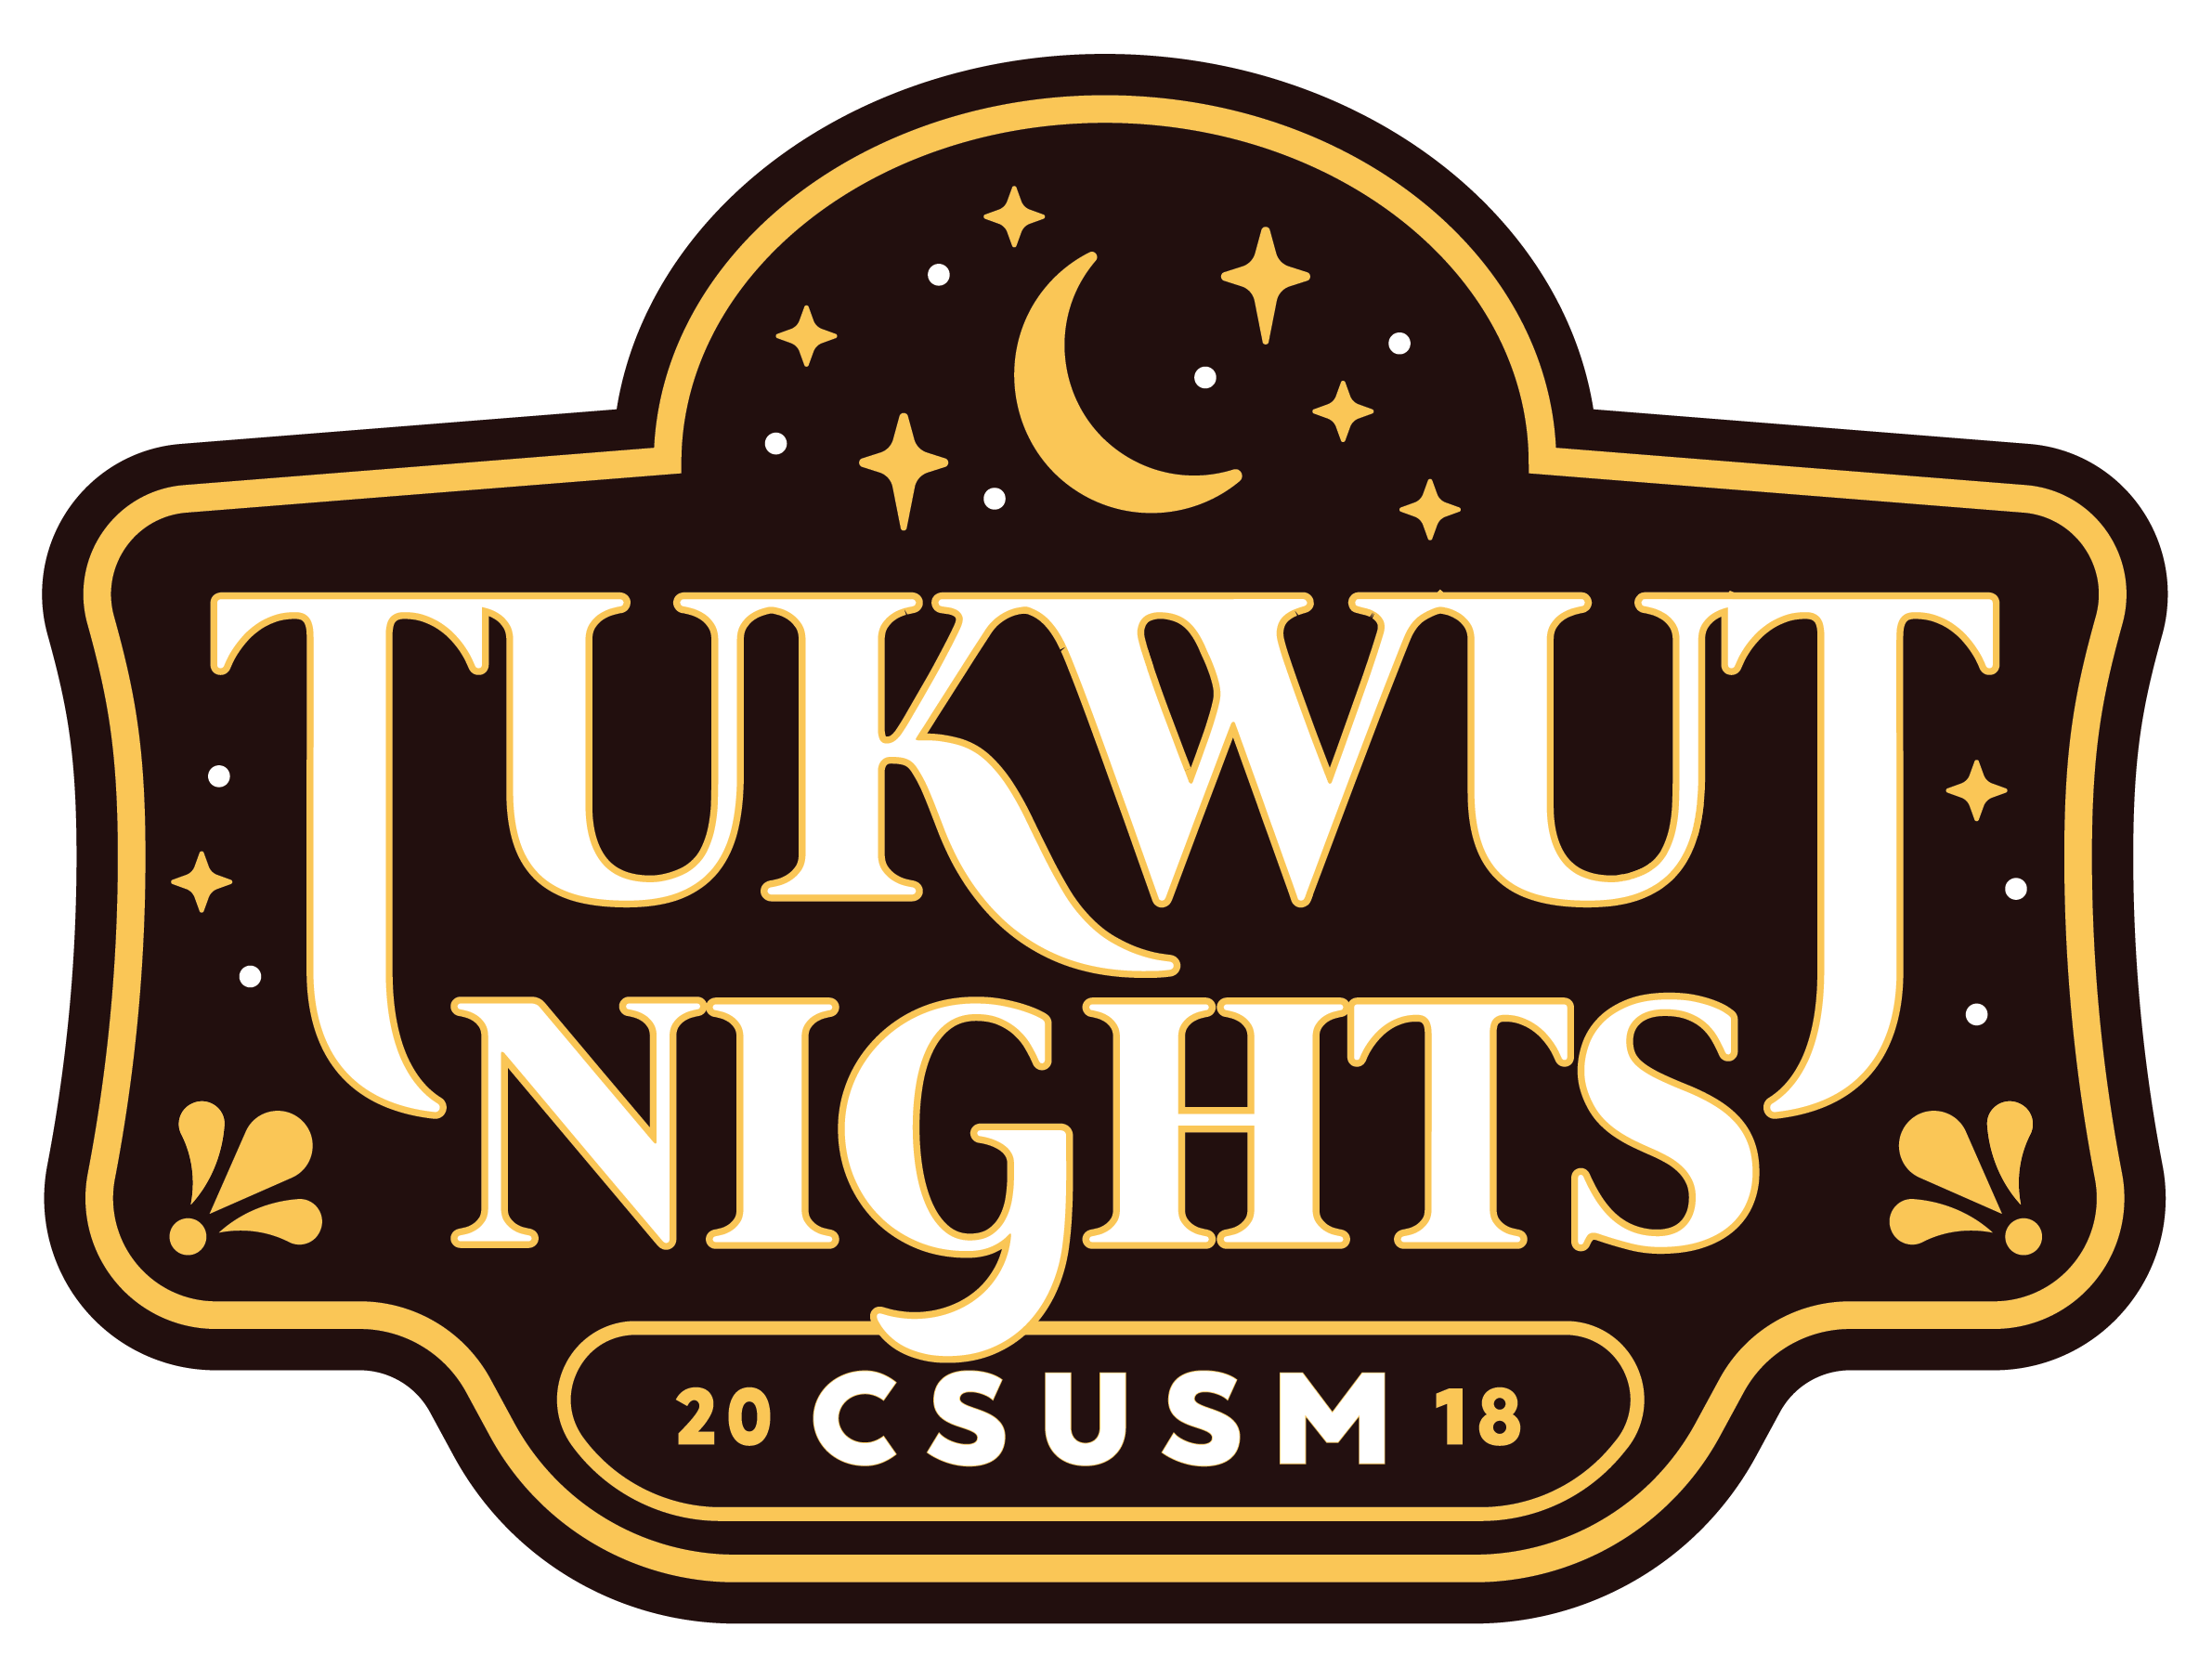 Tuwkut Nights Crest